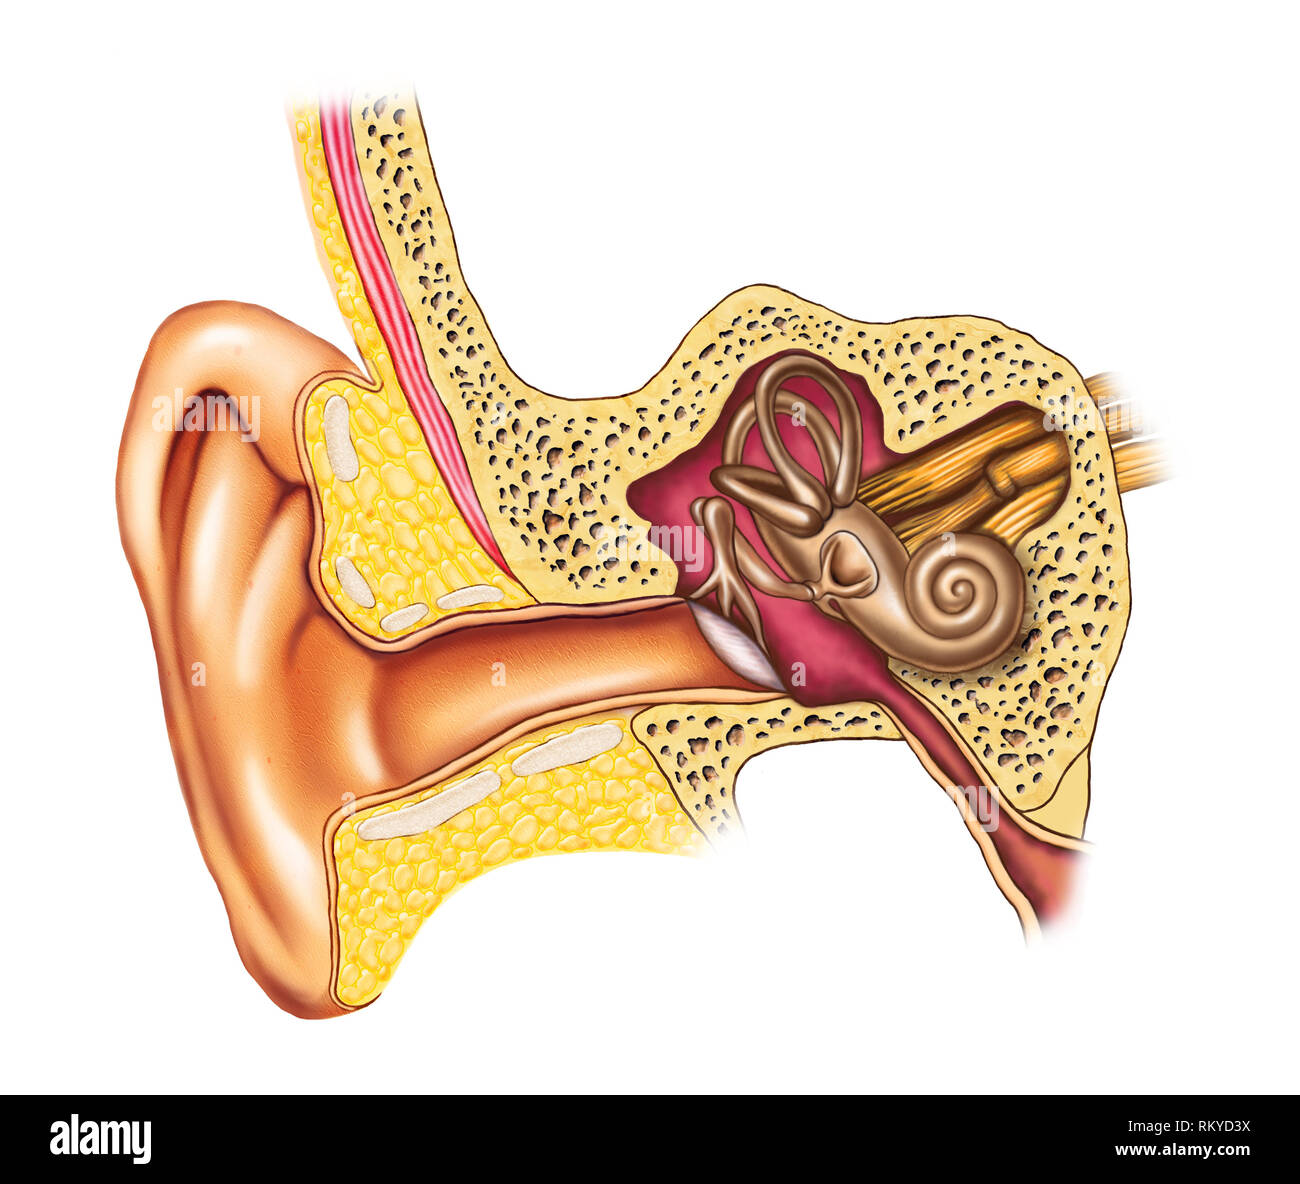 Illustration showing the interiors of an human ear. Digital illustration. Stock Photo